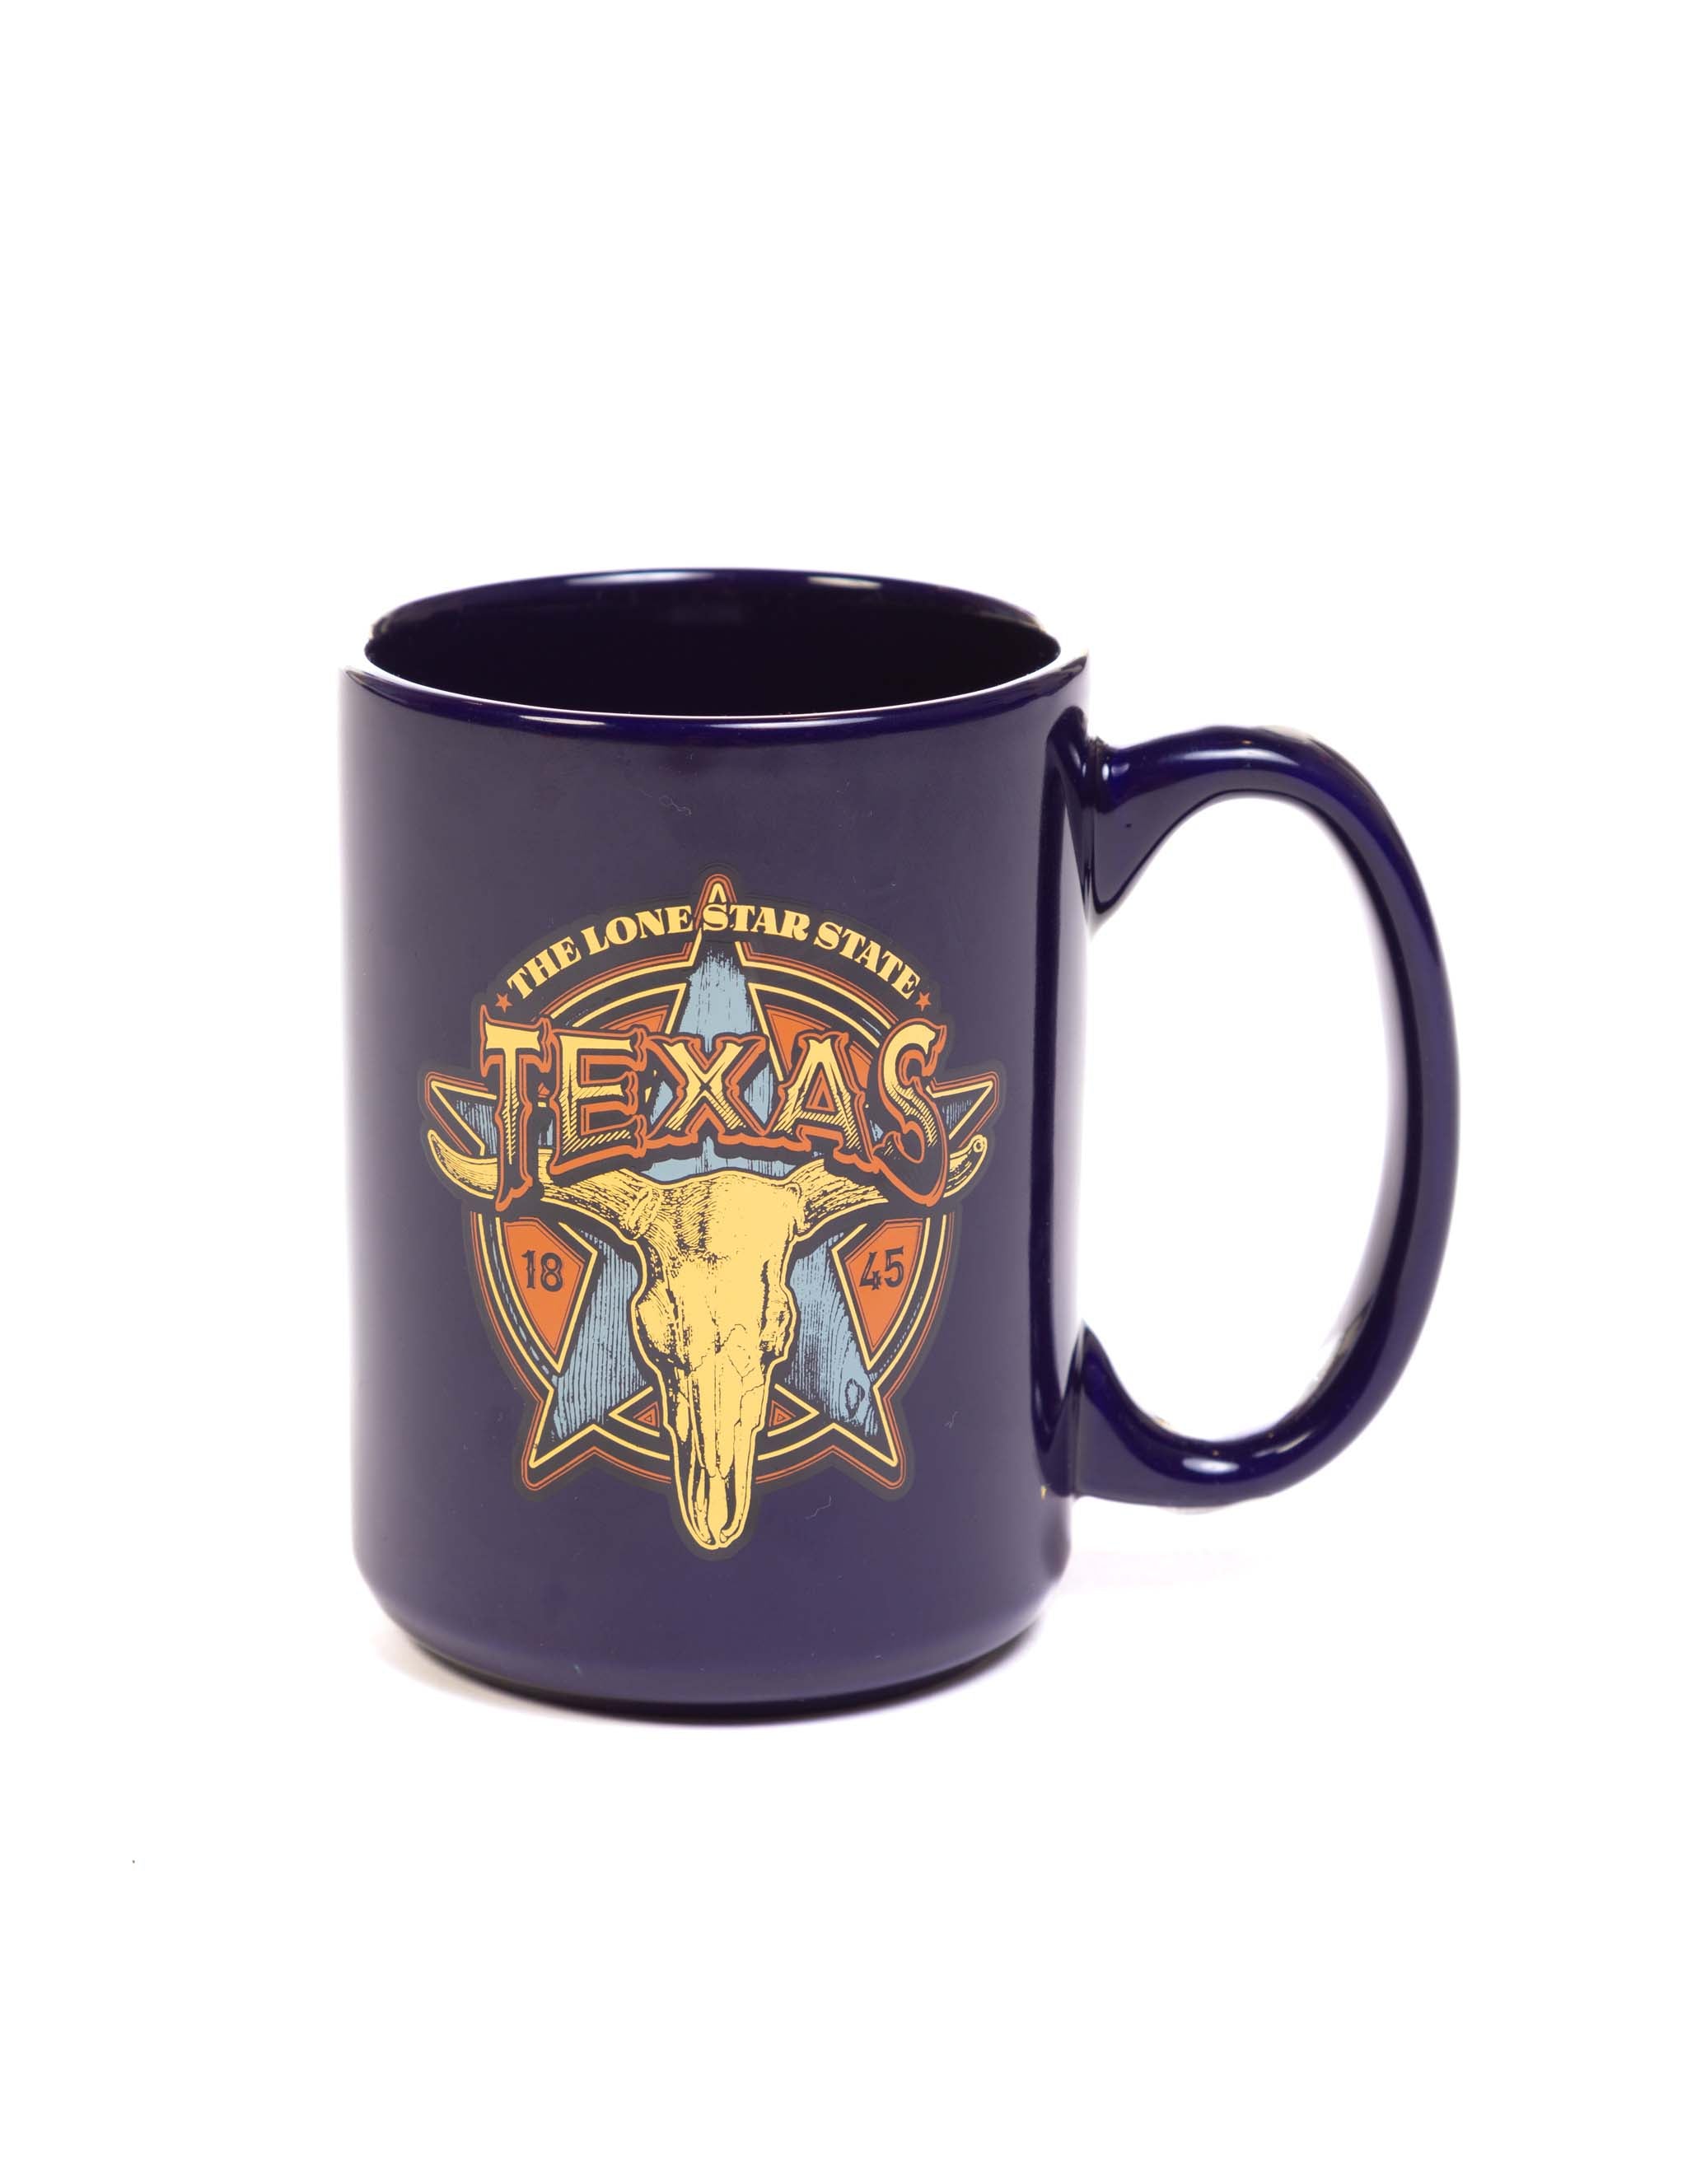 Texas Lone Star Steer Mug